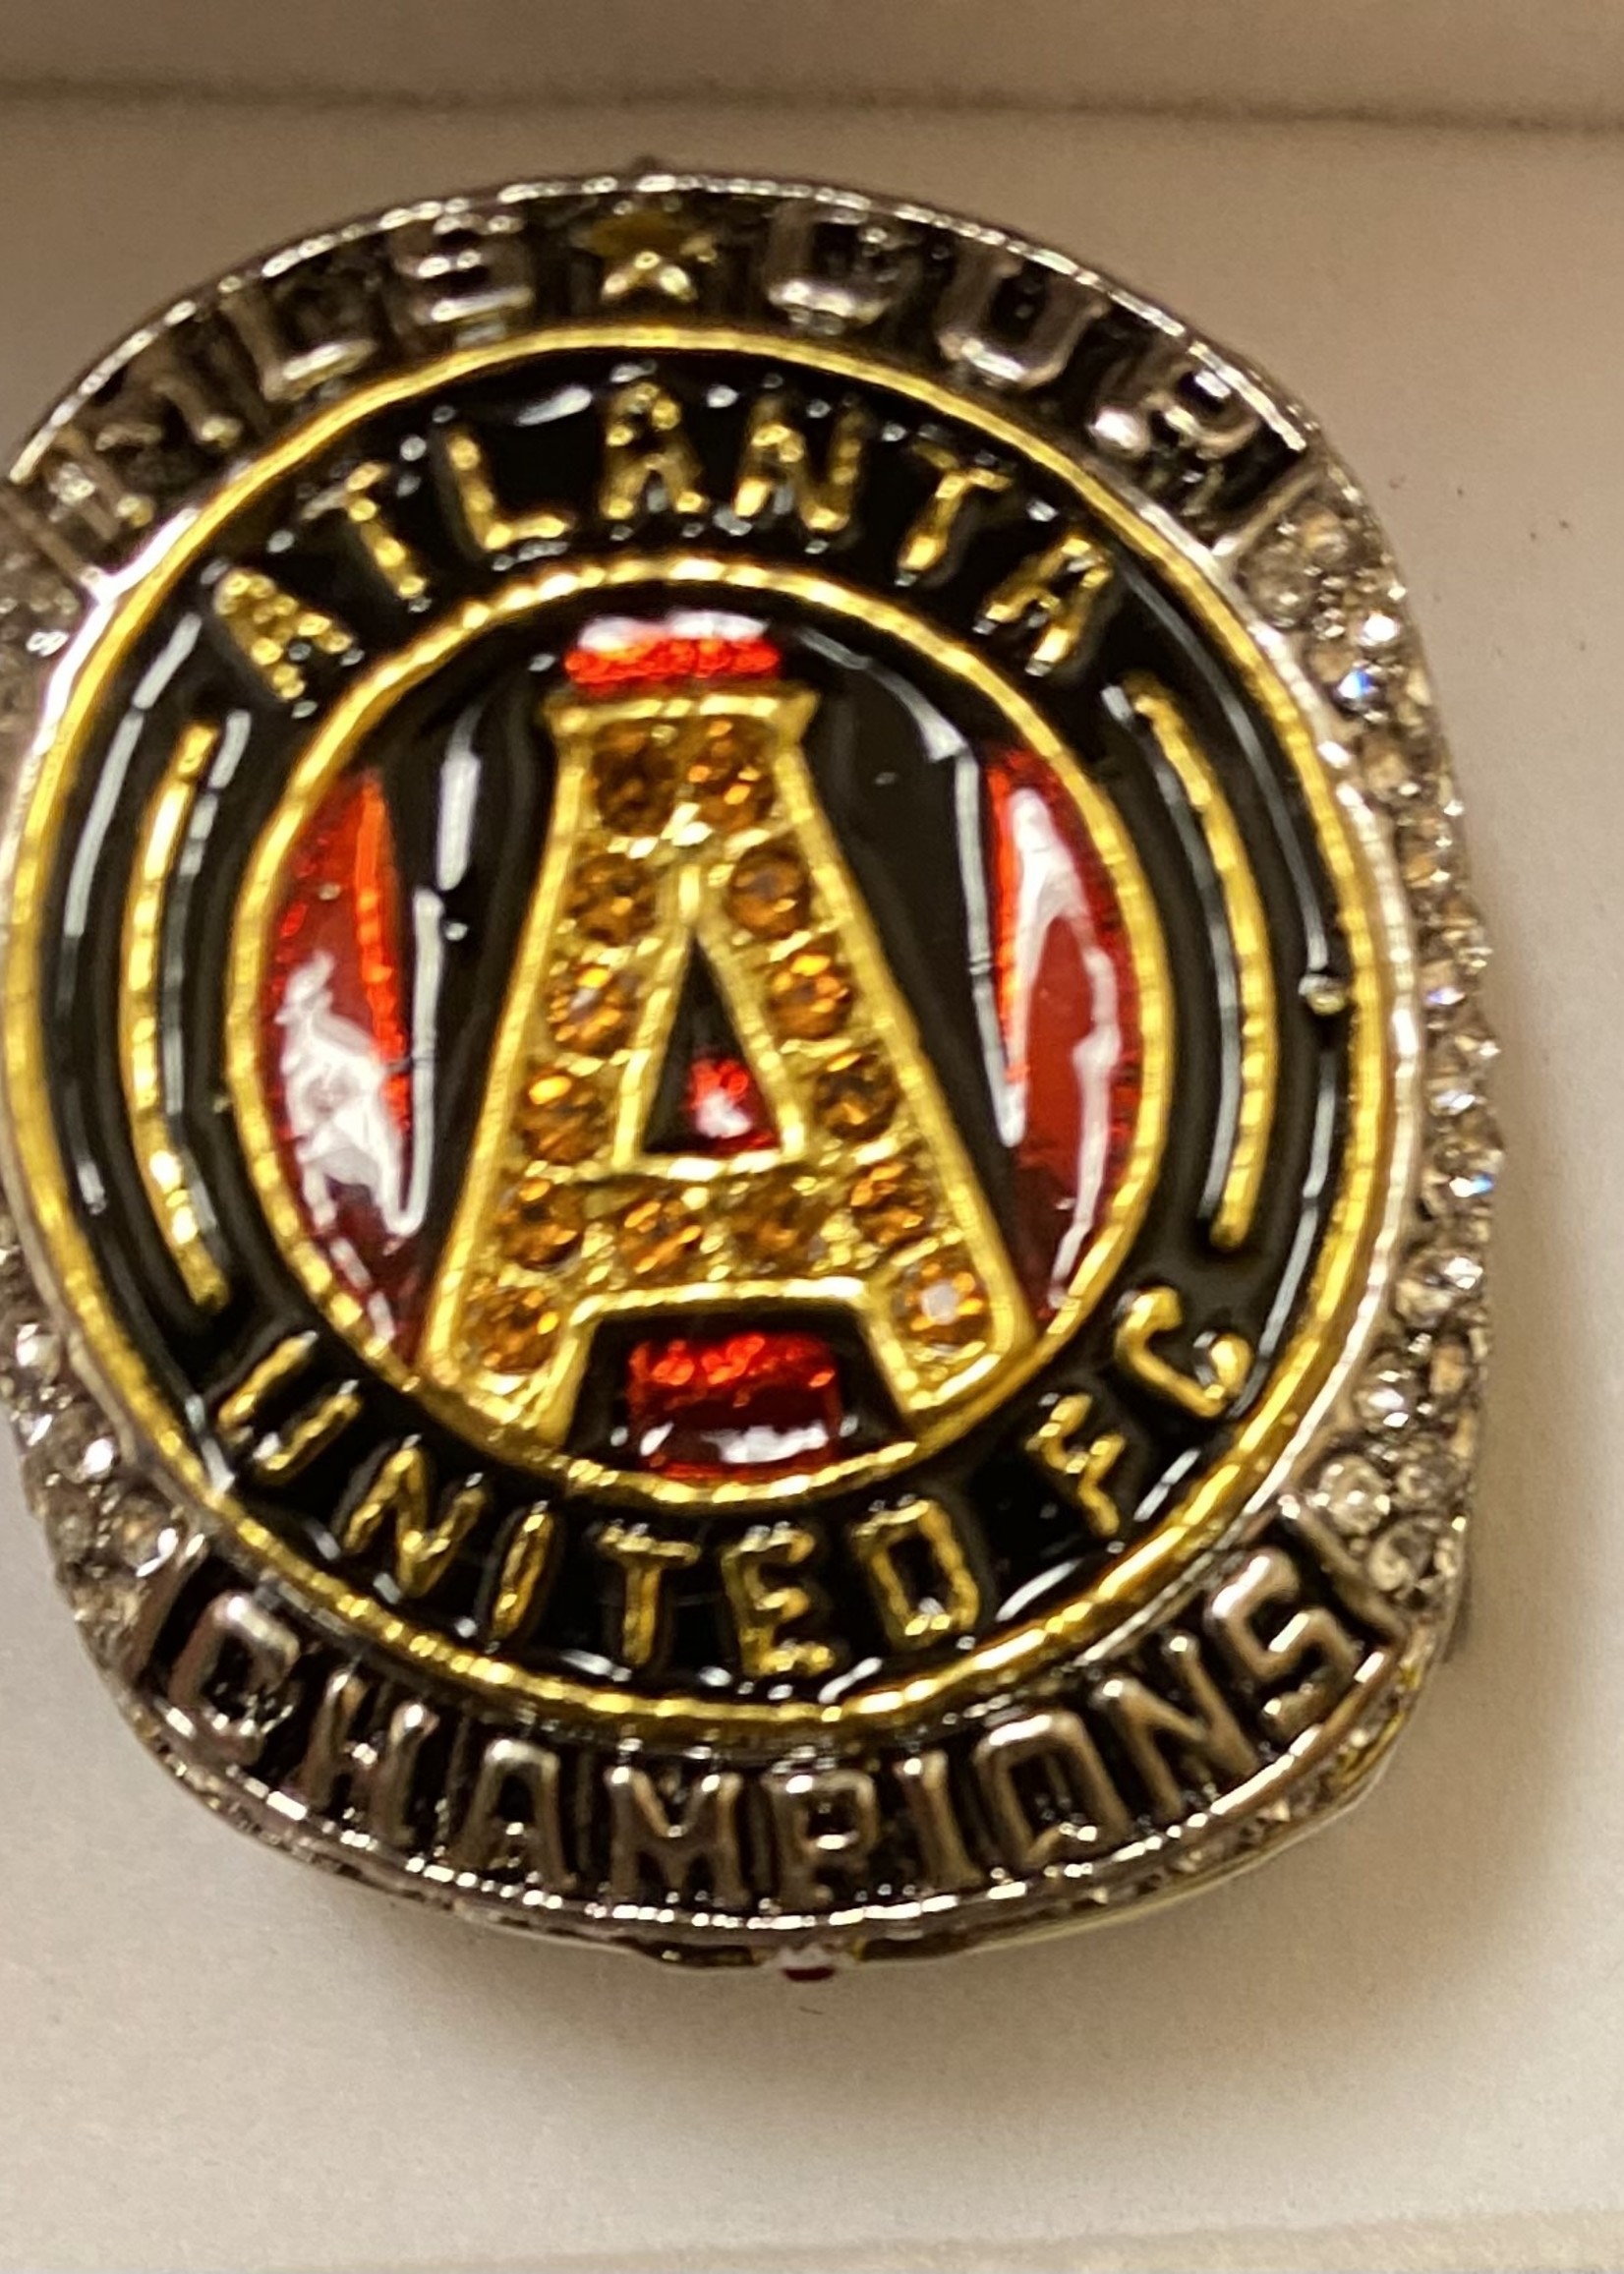 Atlanta United Ring